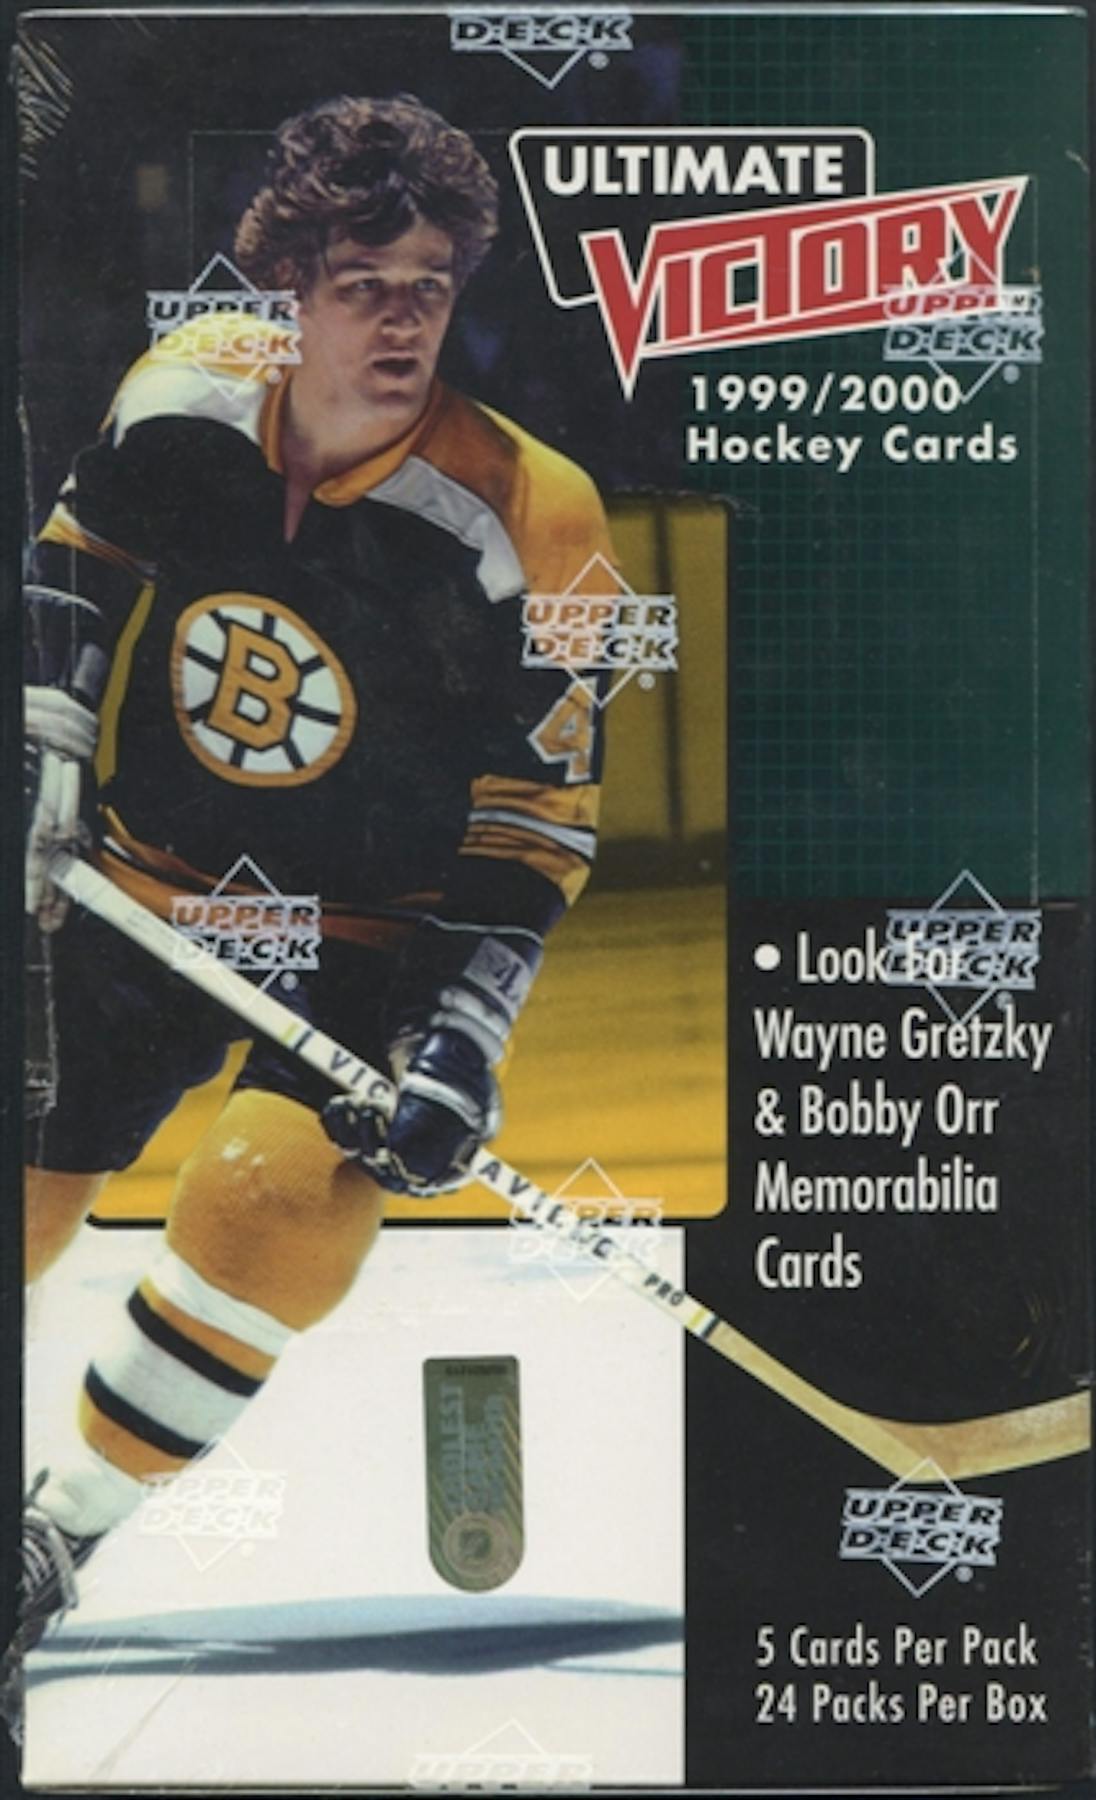 1999-2000 - NHL All-Star Intros in Toronto 